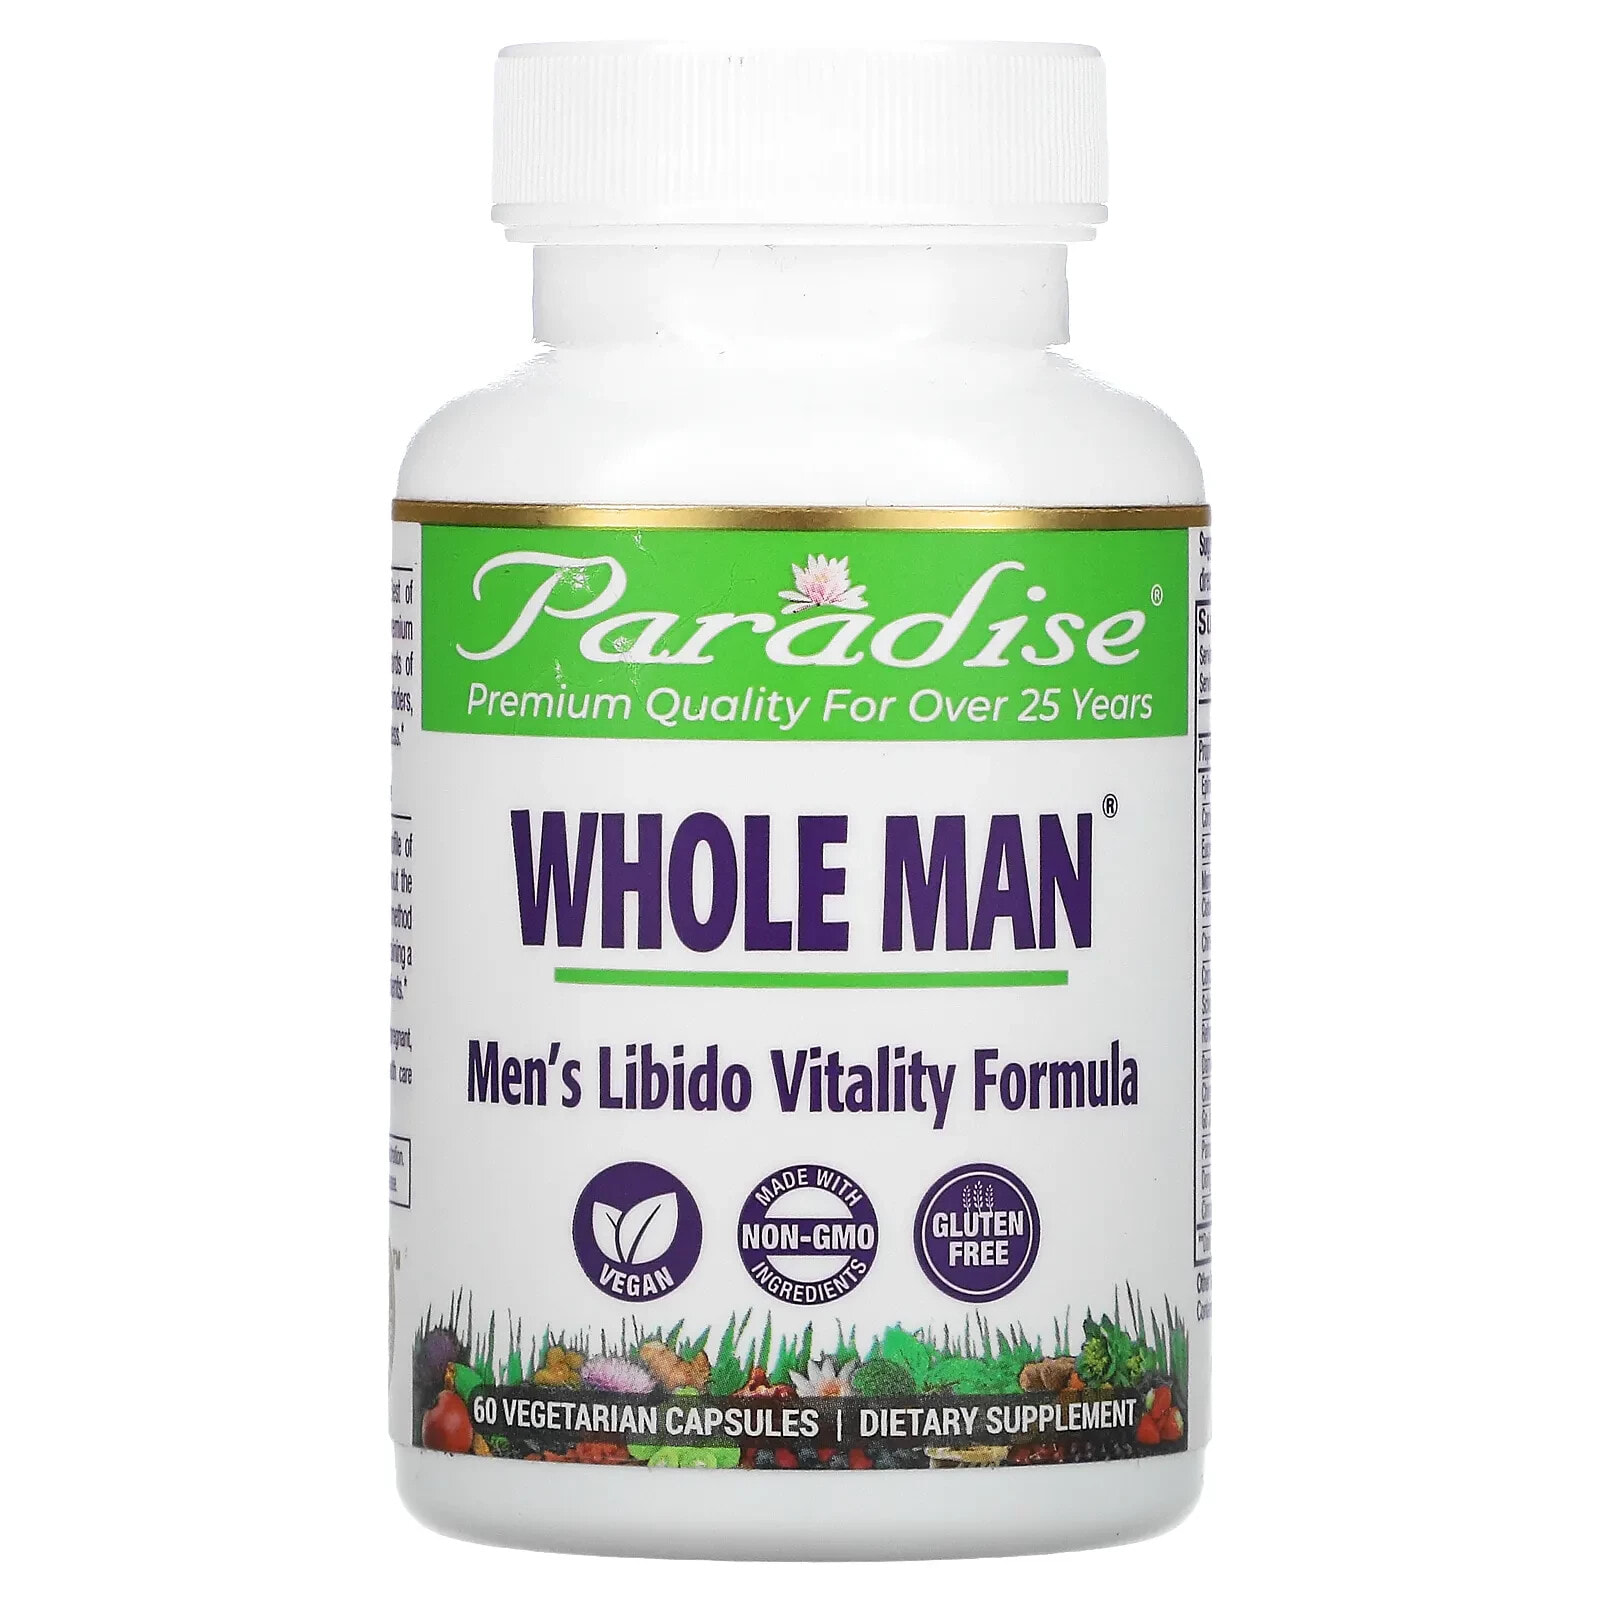 Whole Man, Men's Libido Vitality Formula, 60 Vegetarian Capsules